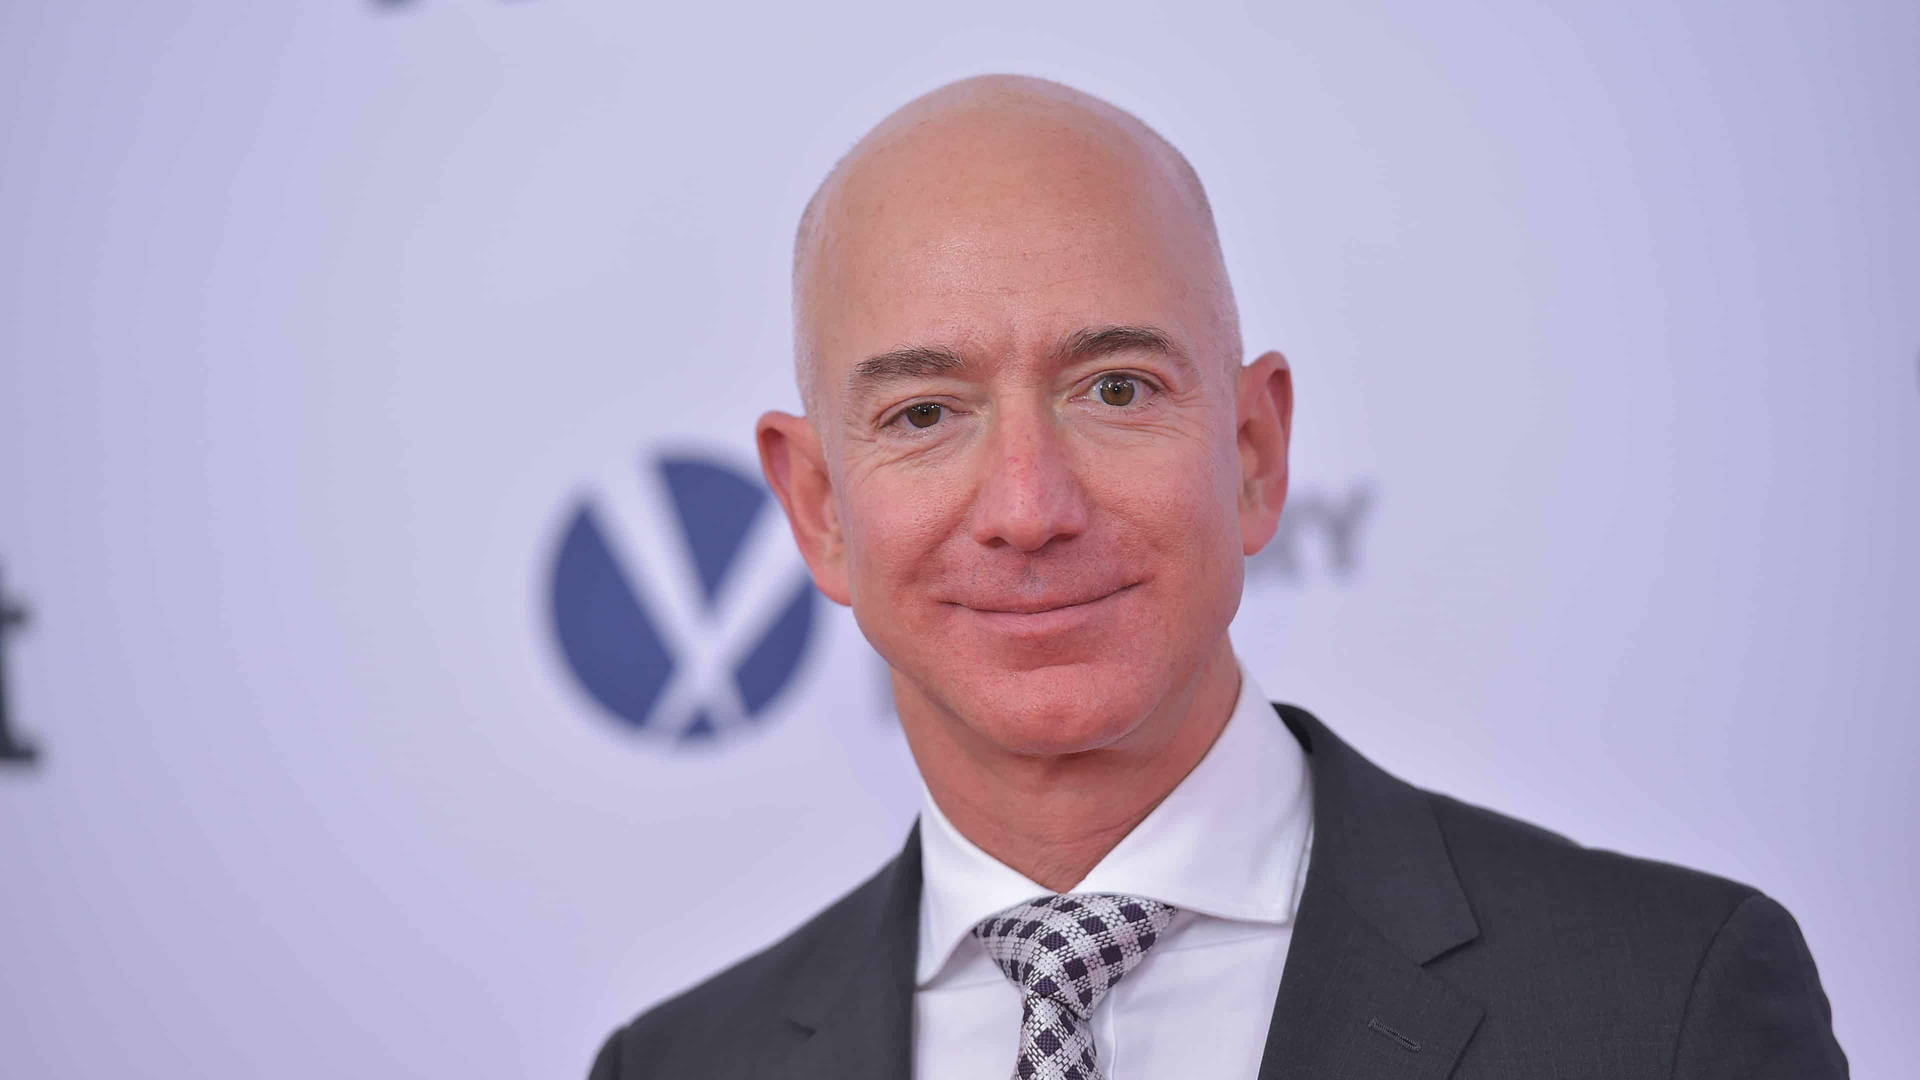 Jeff Bezos Suit And Tie Wallpaper